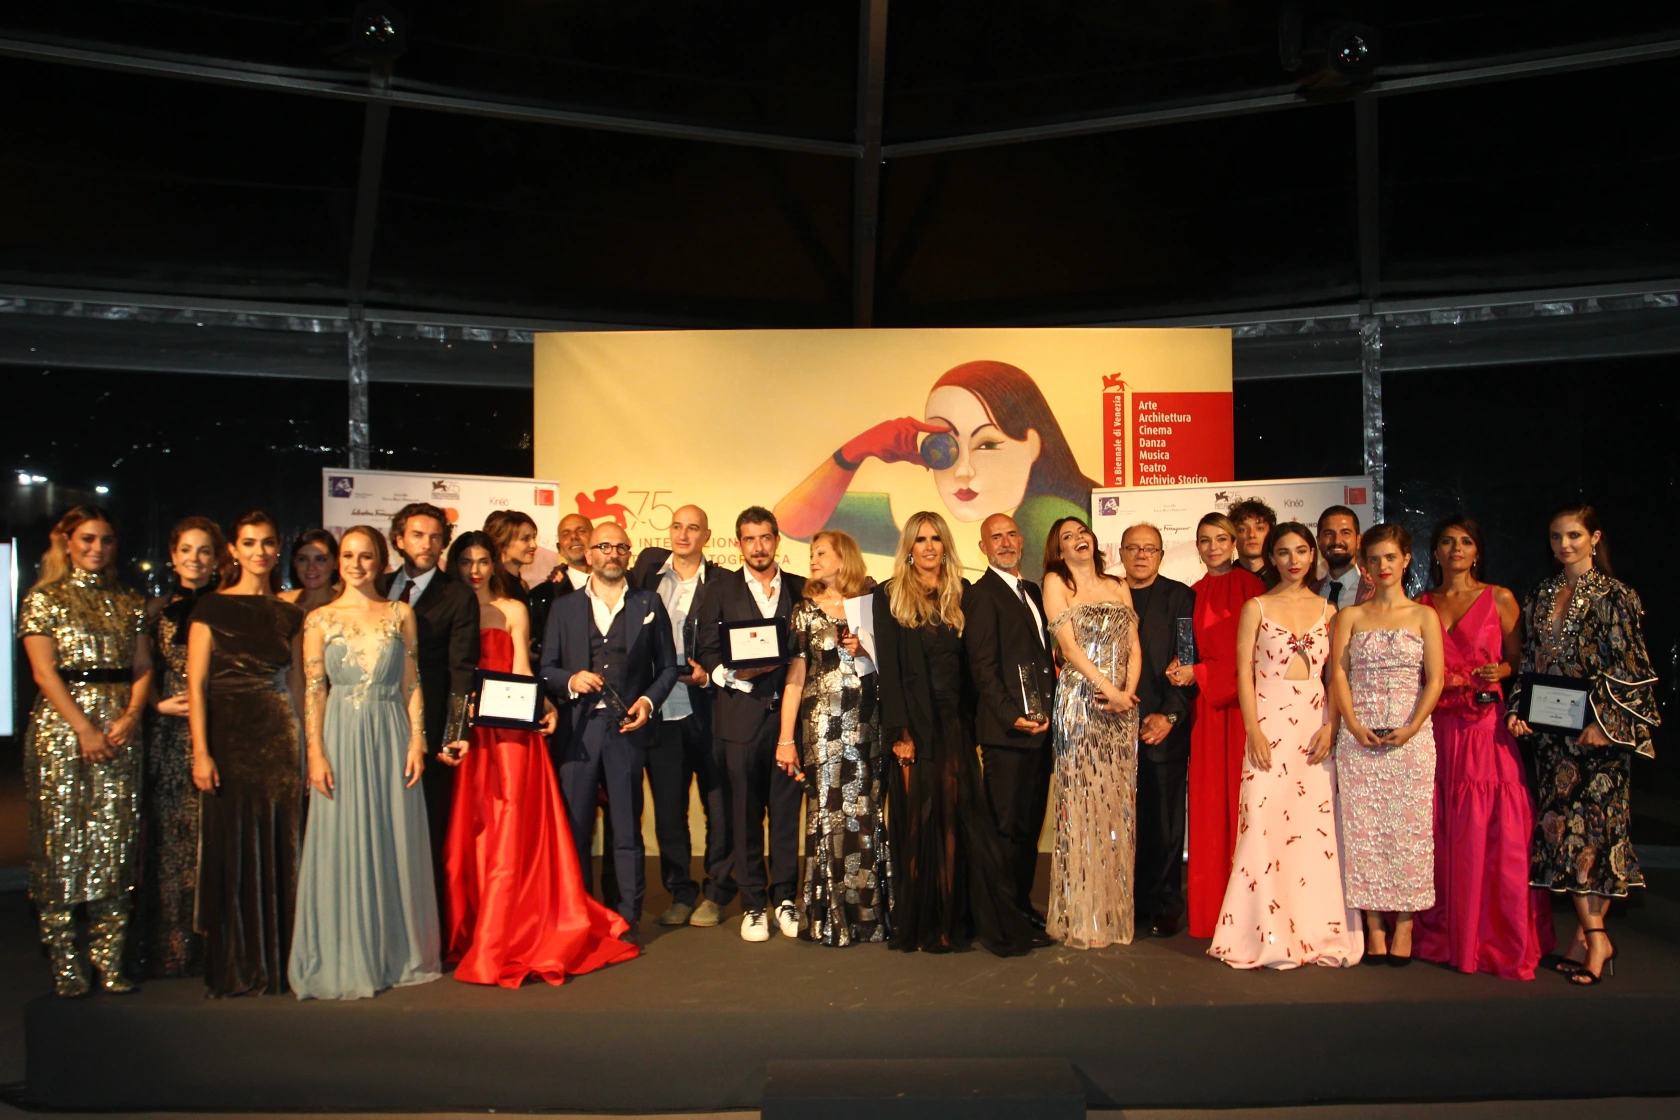 Kinèo Award: celebrates 20 years at the Venice International Film Art Exhibition